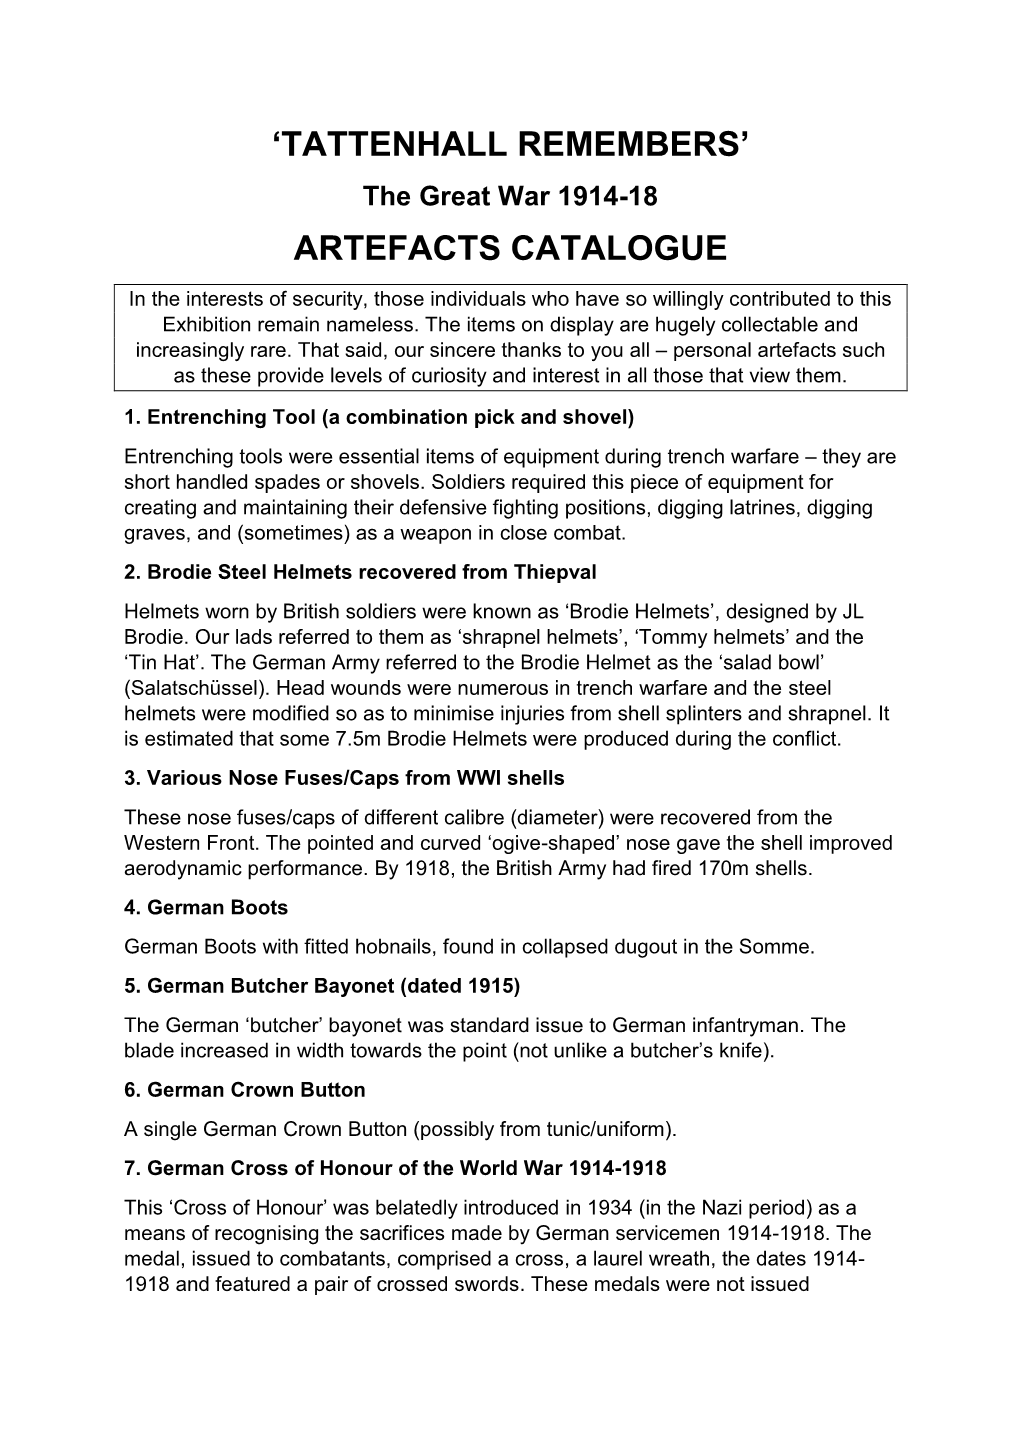 Artefacts Catalogue